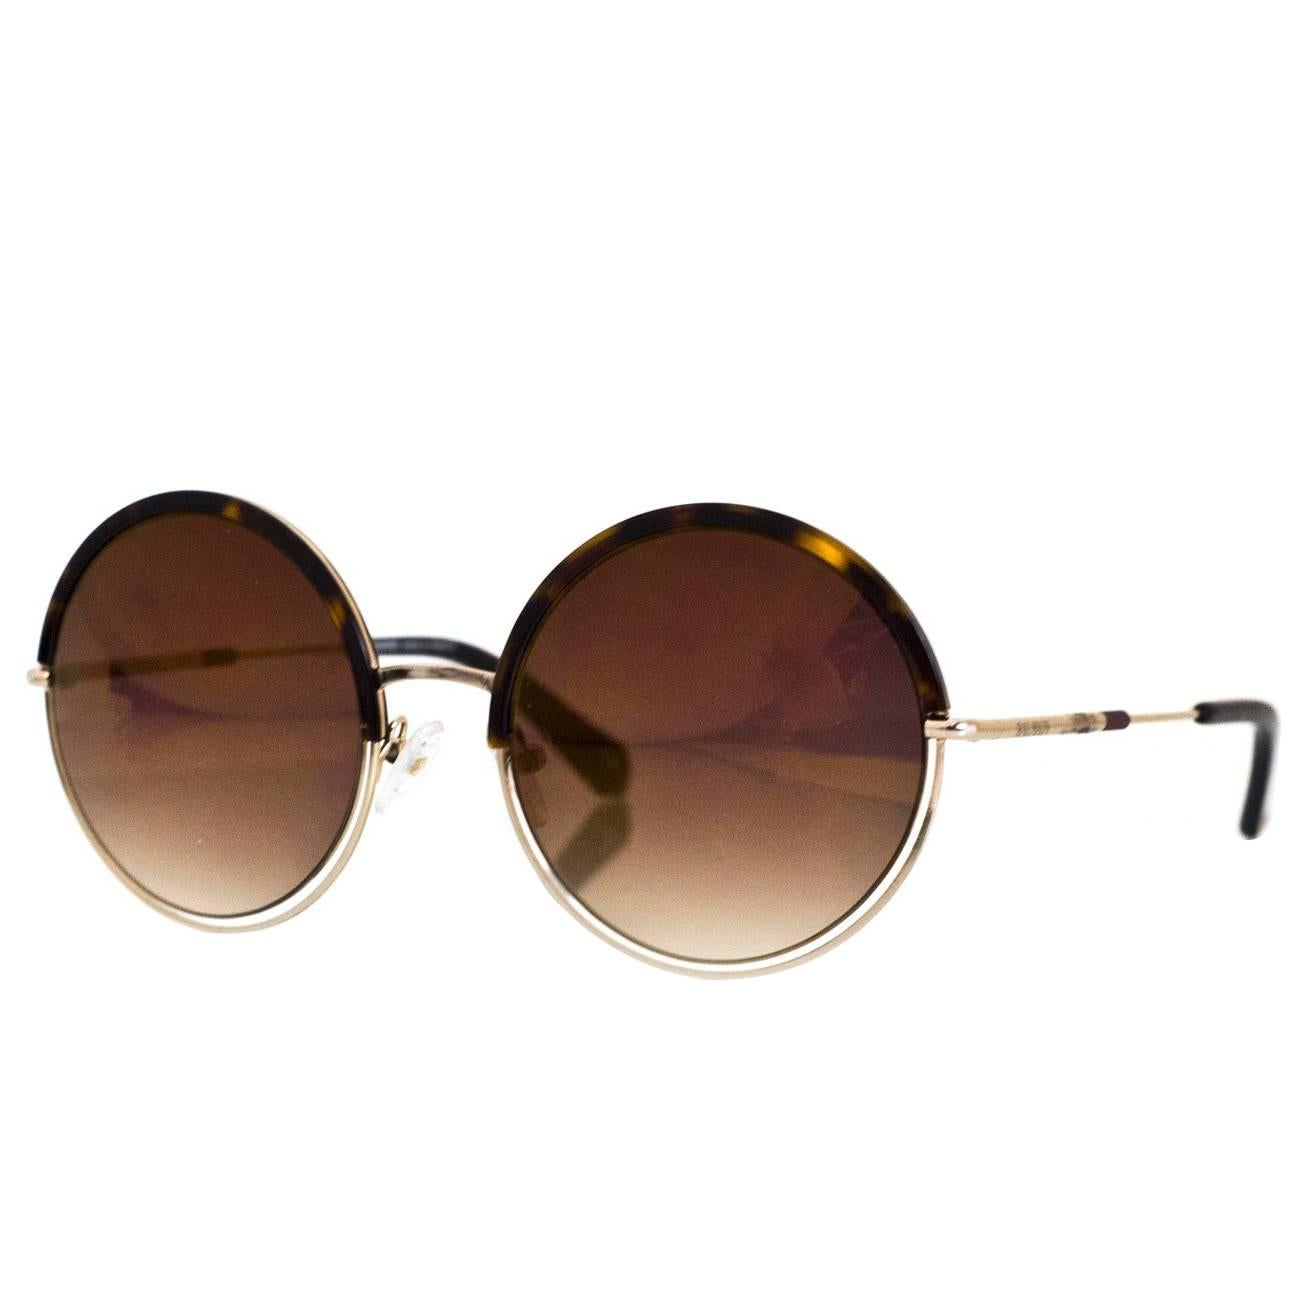 Balmain Tortoise & Goldtone Round Frame Sunglasses with Box, Case